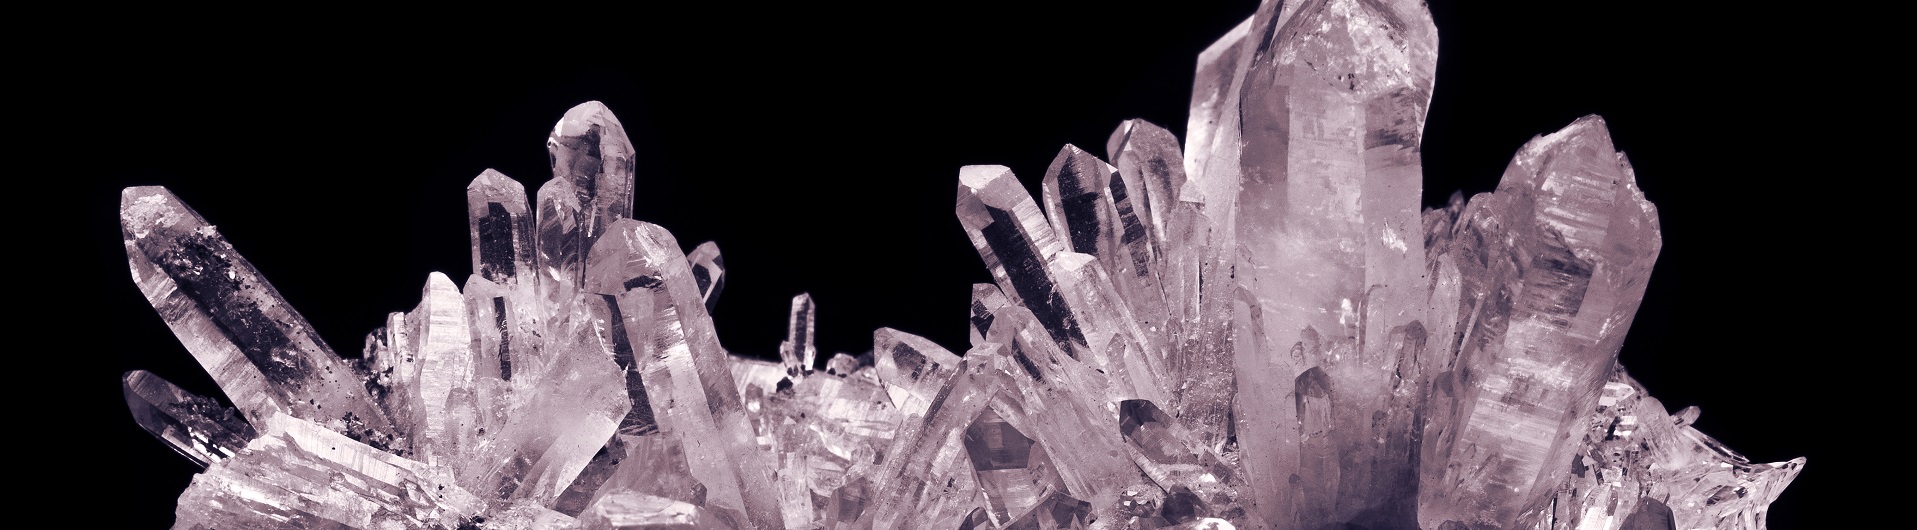 crystalline silica